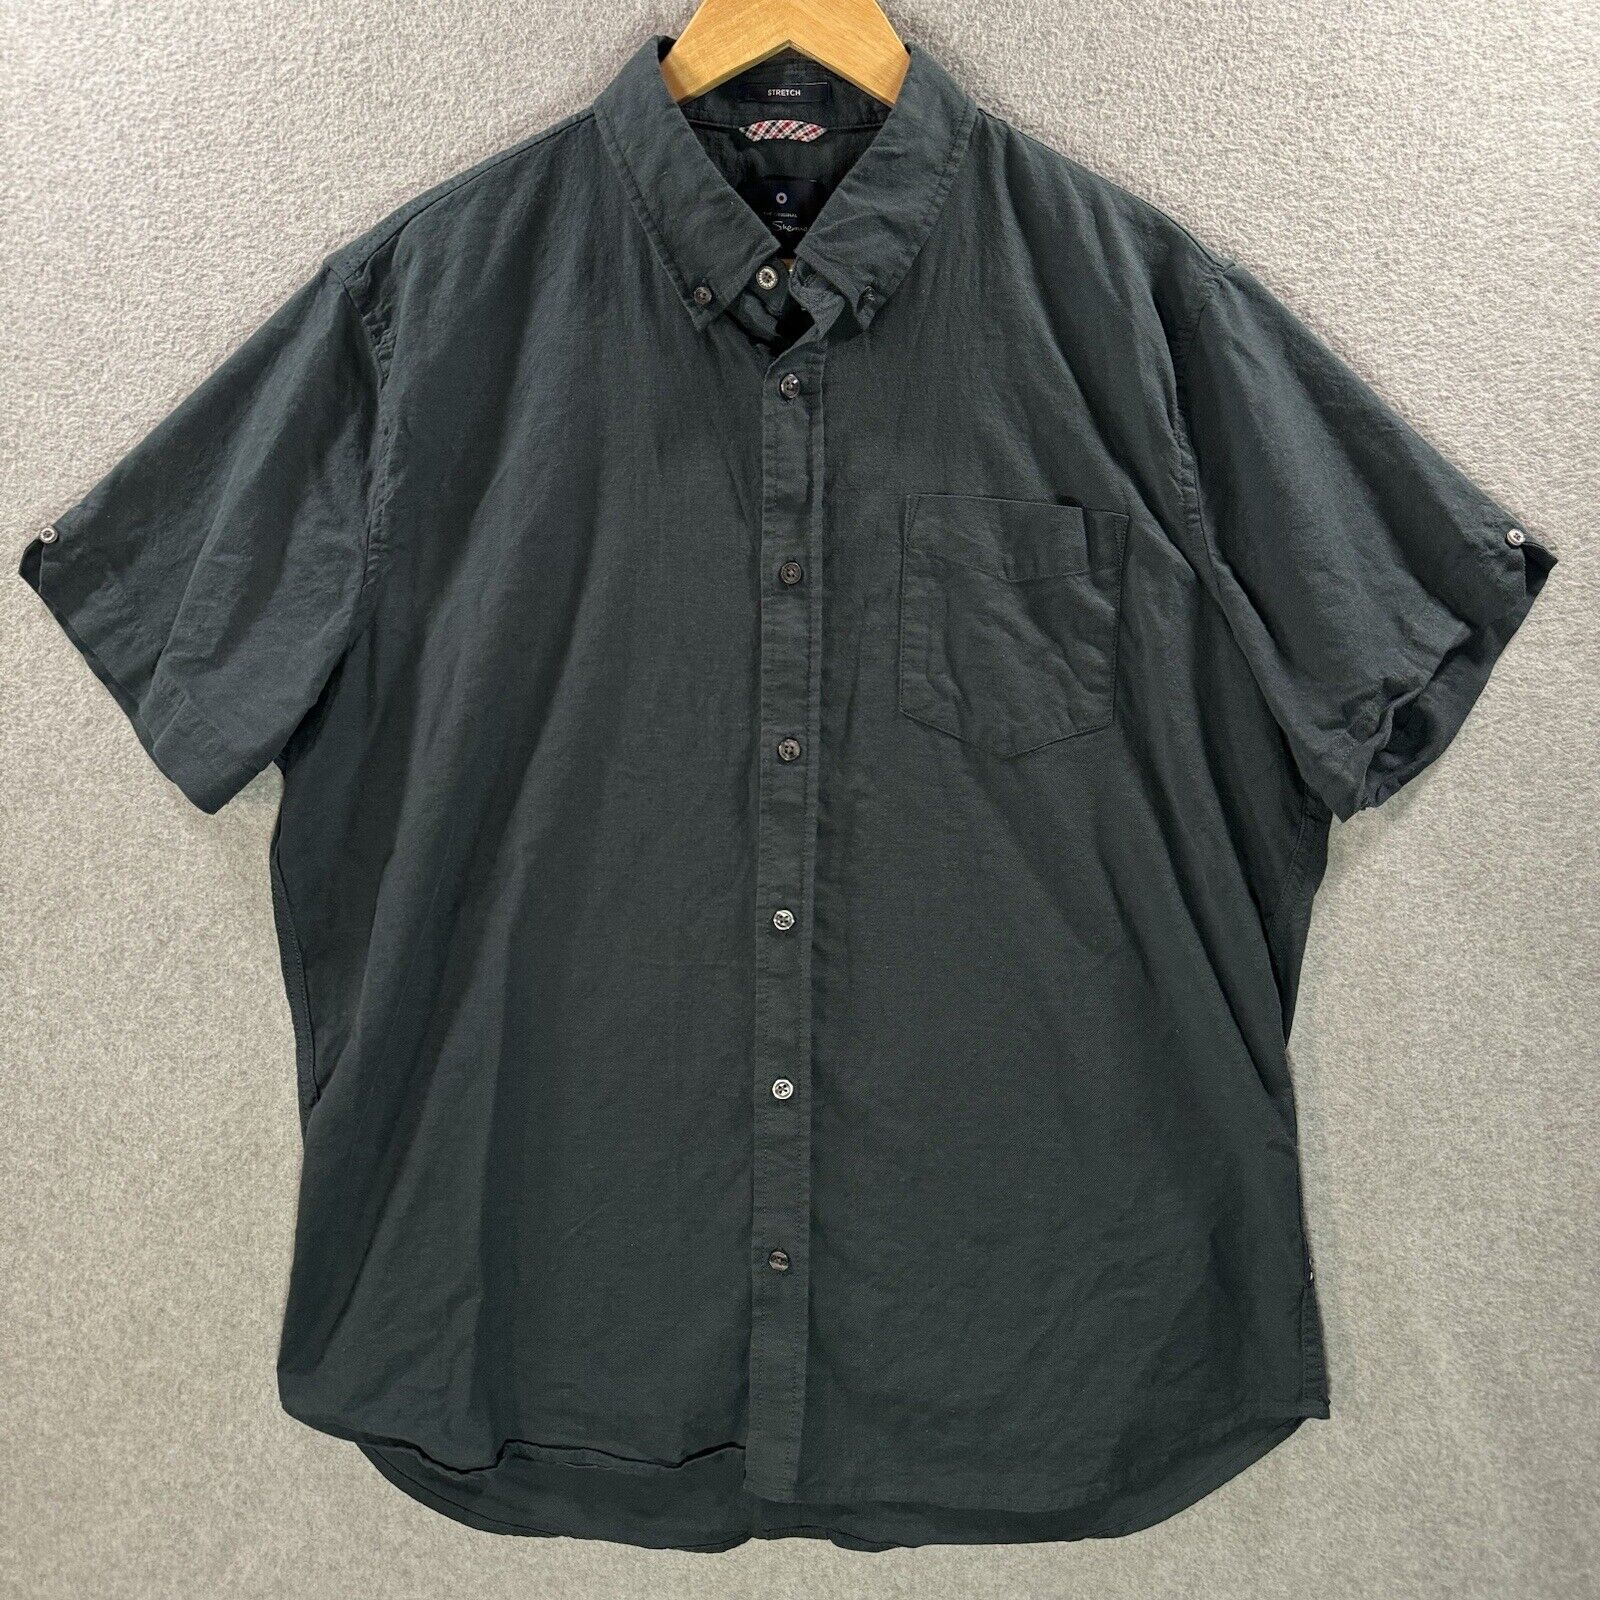 Ben Sherman Men\'s size XL Oxford Shirt Short Sleeve Regular Fit Dark Green Solid